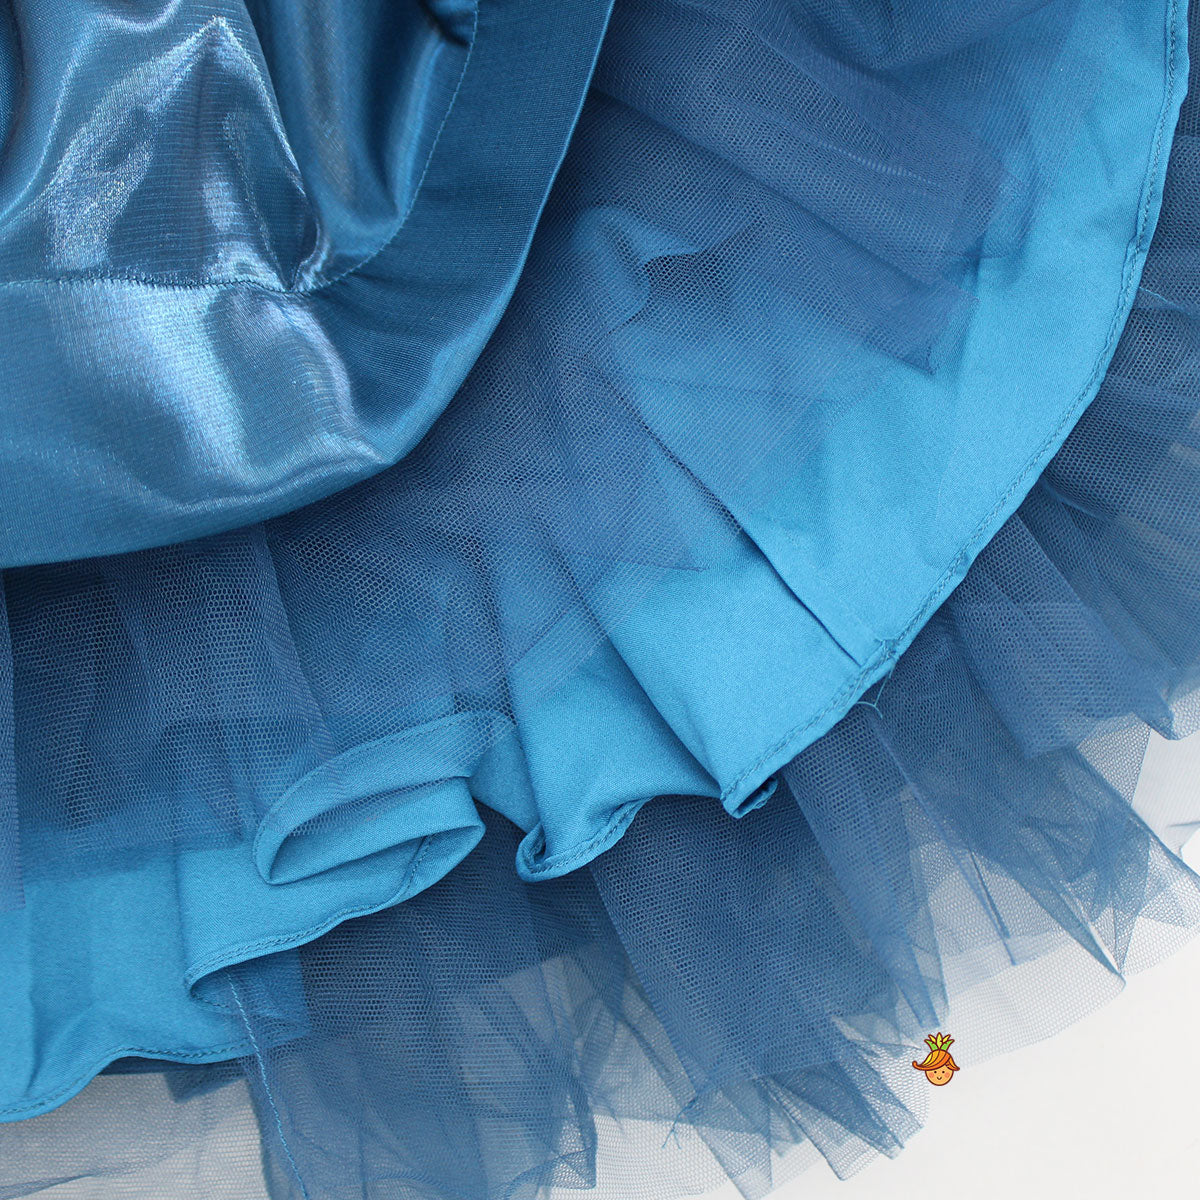 Bows Enhanced Gorgeous Blue Dress